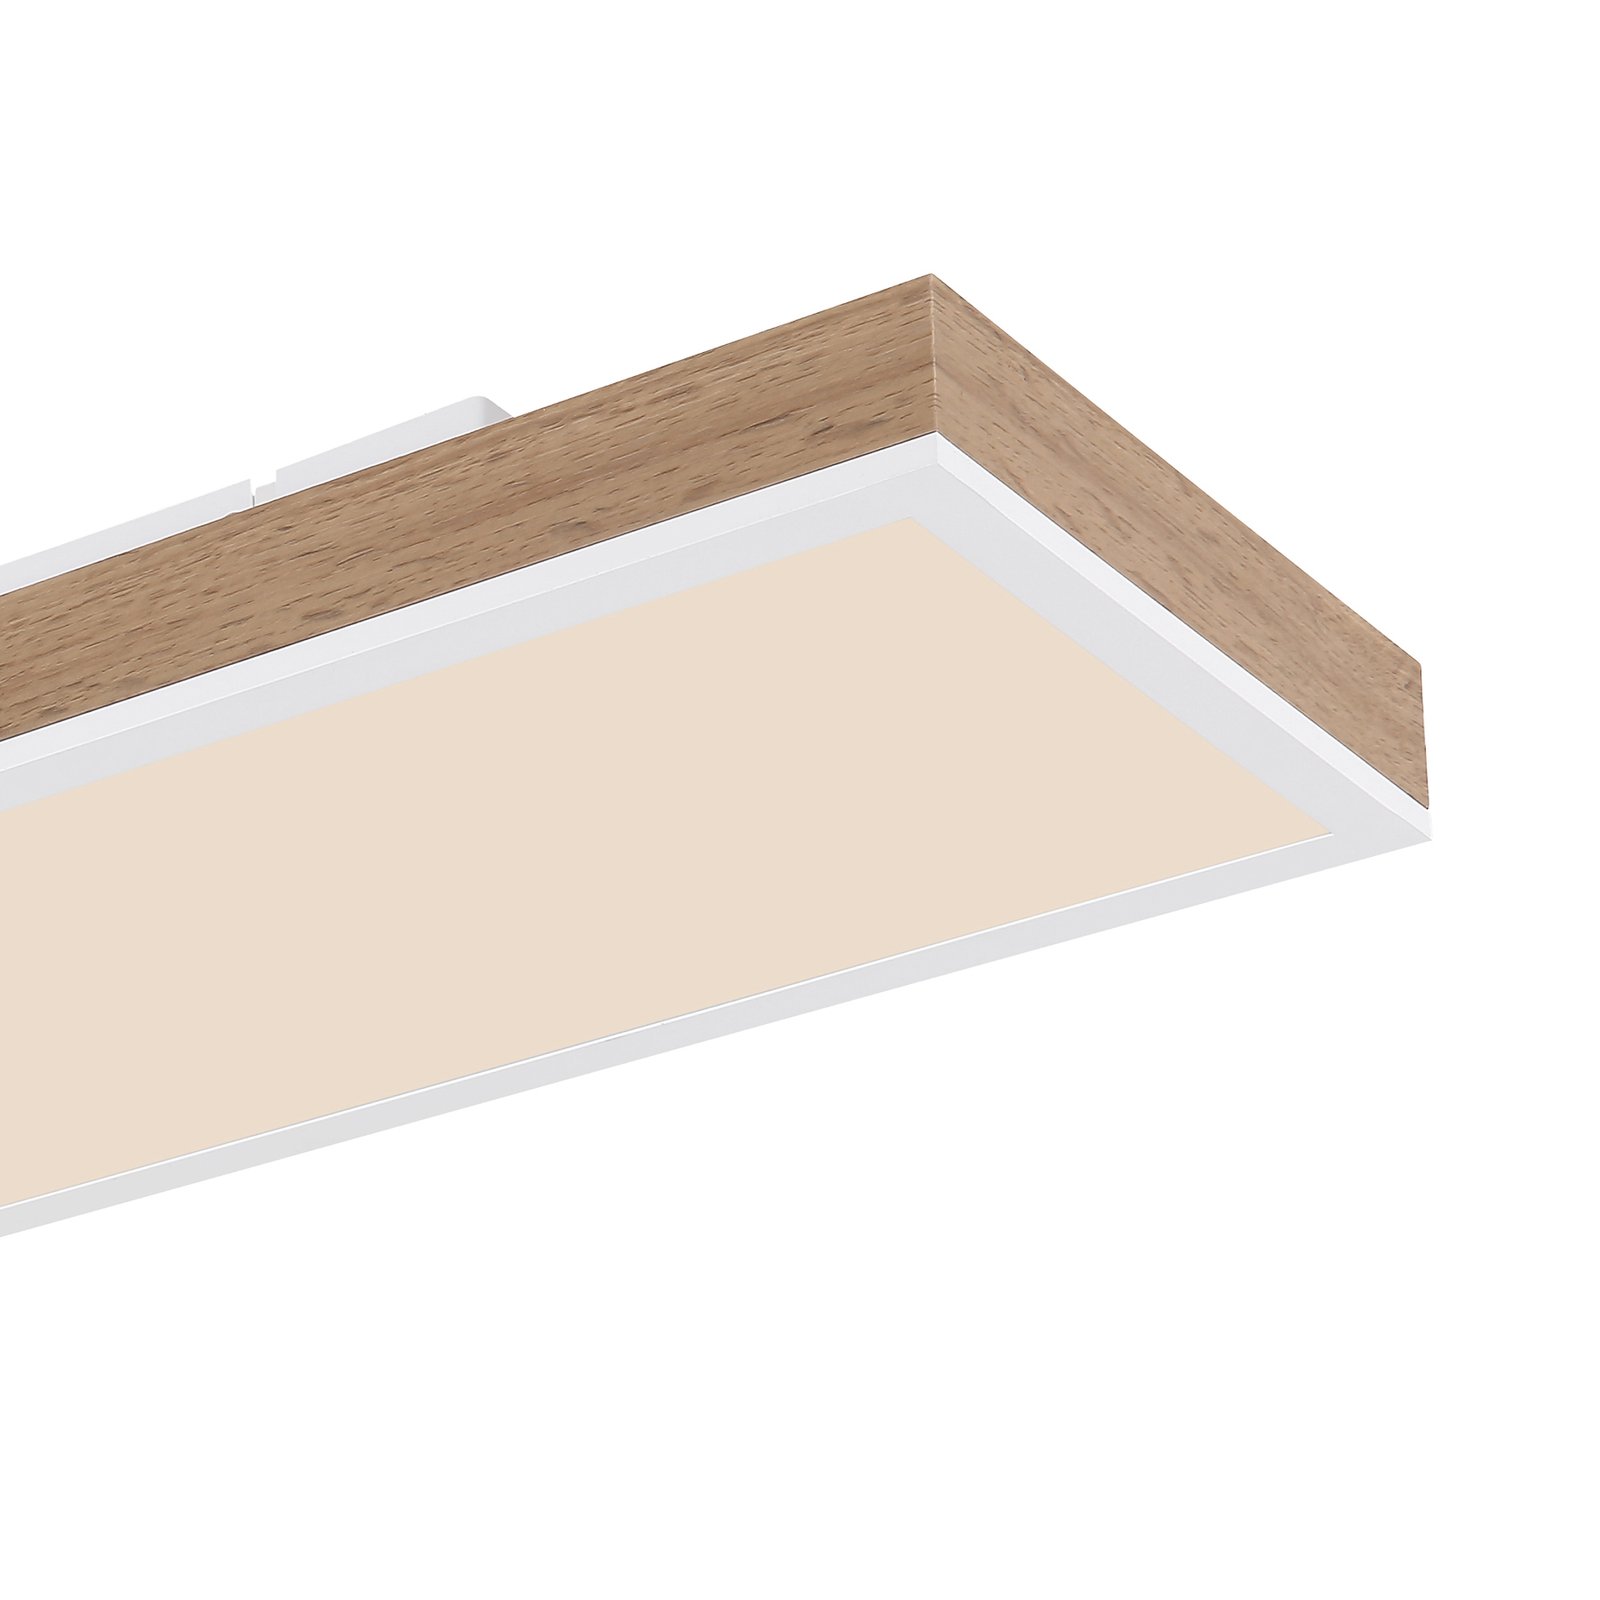 LED ceiling lamp Doro, length 80 cm, dark wood, wood, CCT